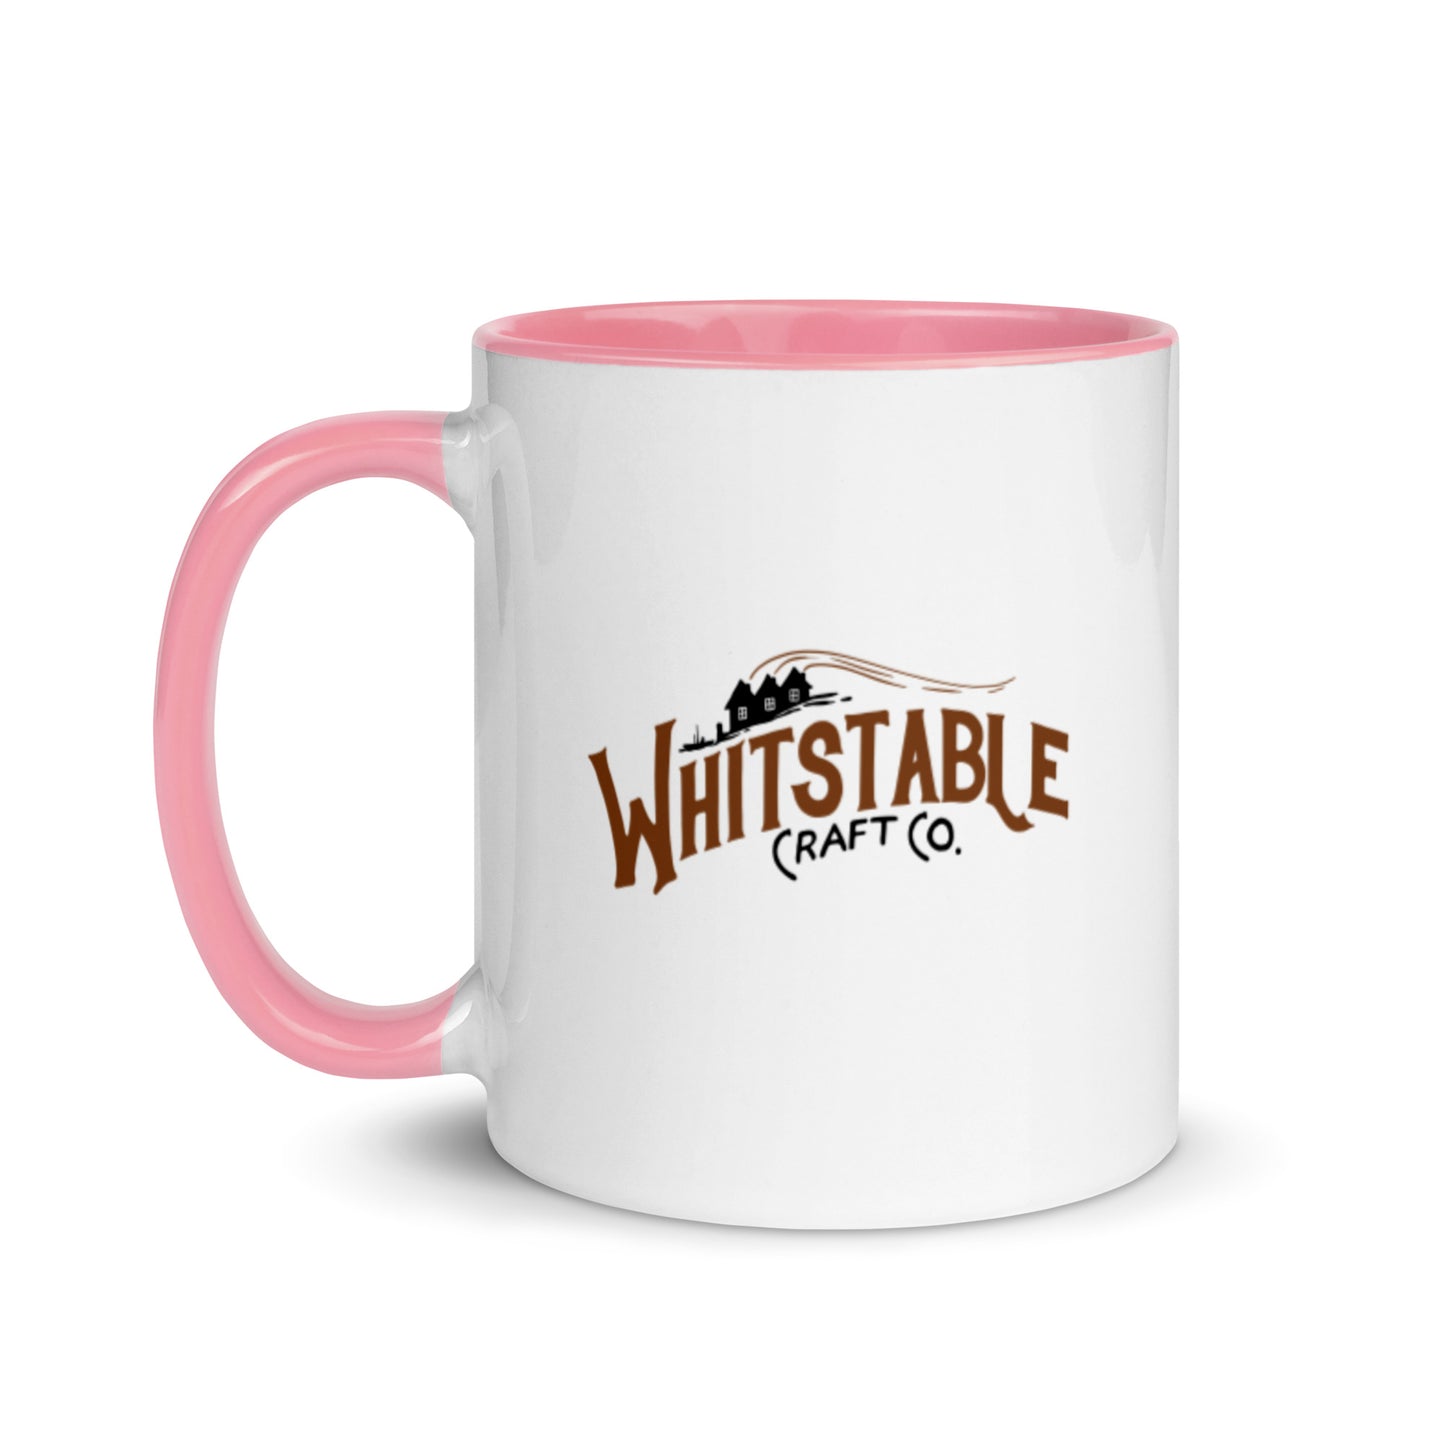 Whitstable Craft Co Mug